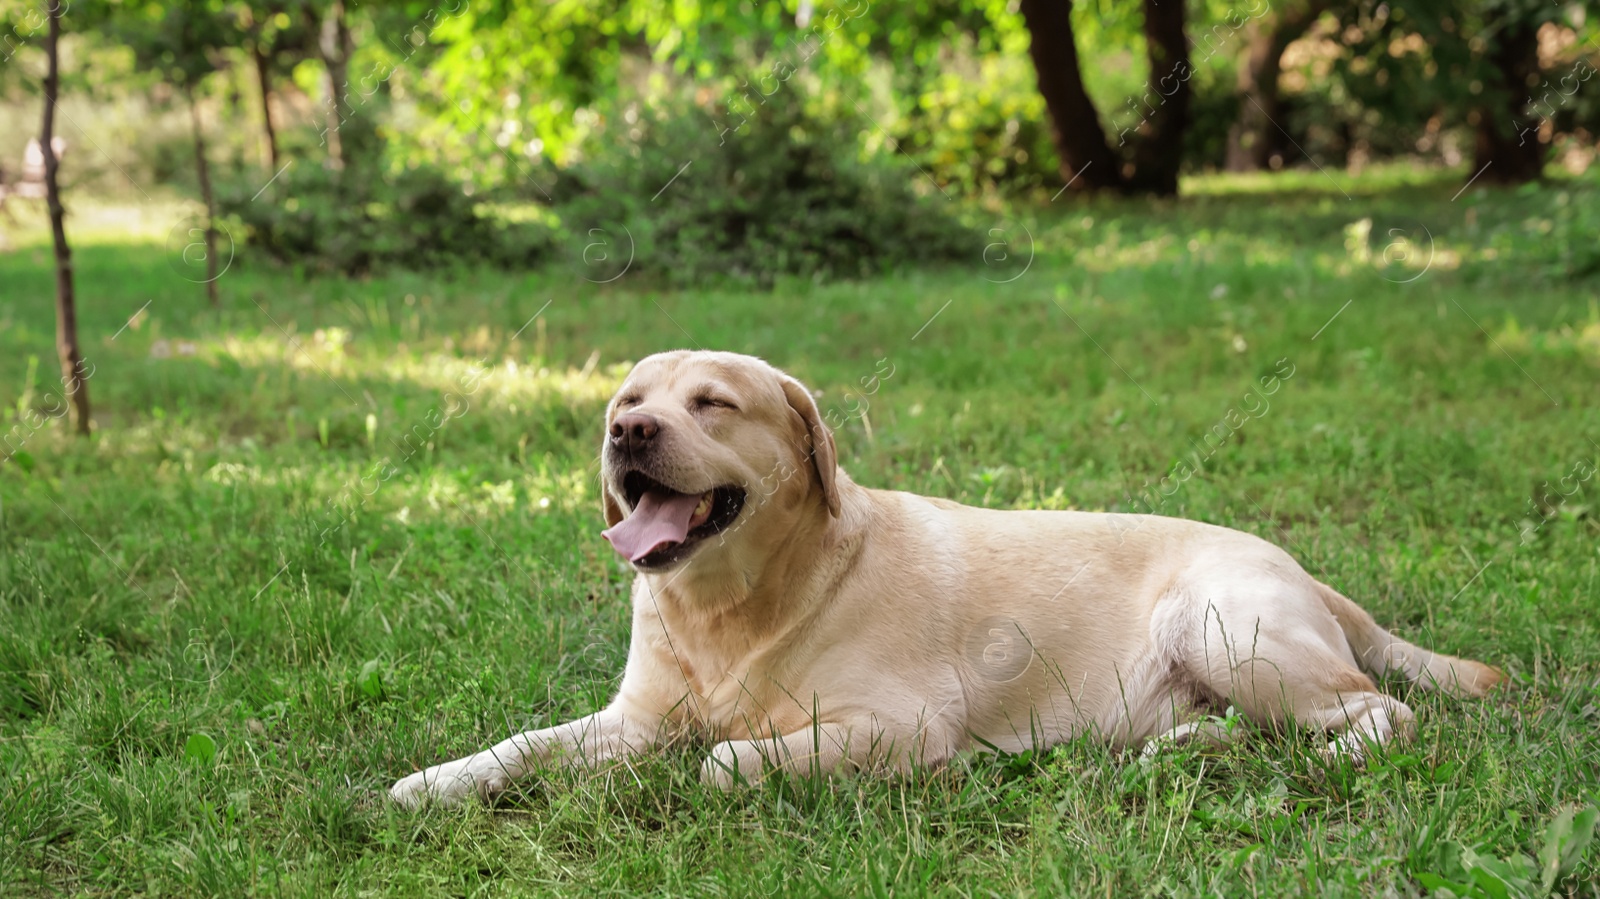 Photo of Cute Golden Labrador Retriever on green grass in summer park